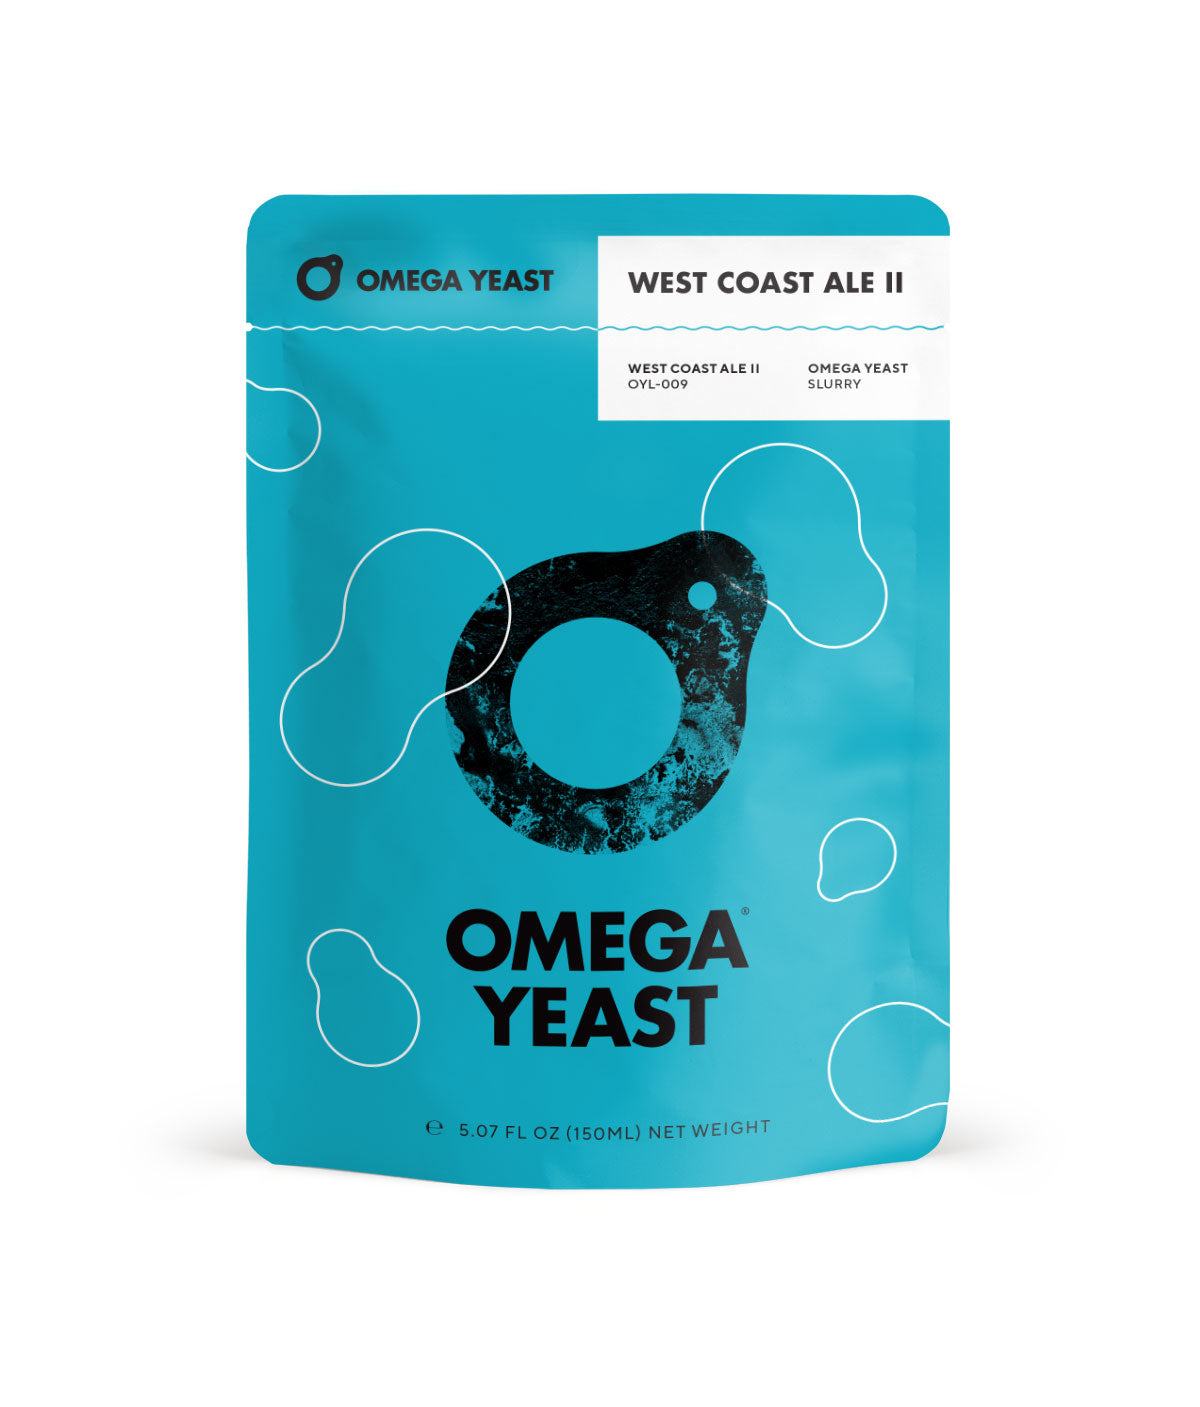 West Coast Ale II by Omega Yeast